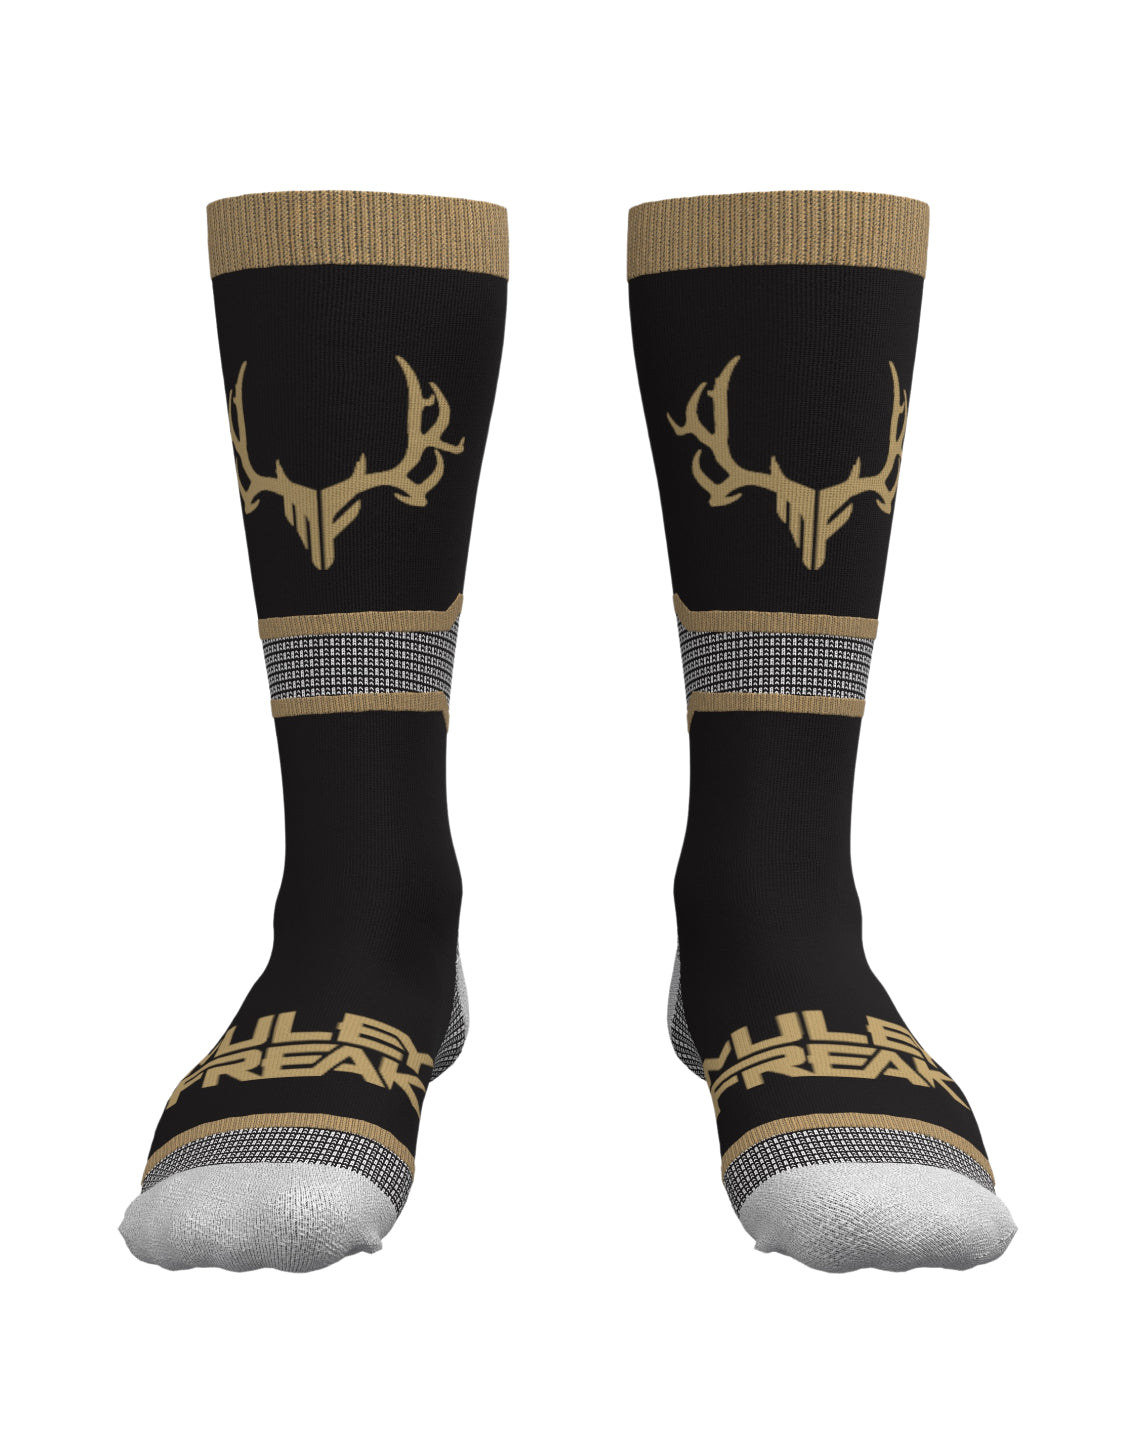 High-performance Merino socks by Muley Freak with sweat-wicking technology.